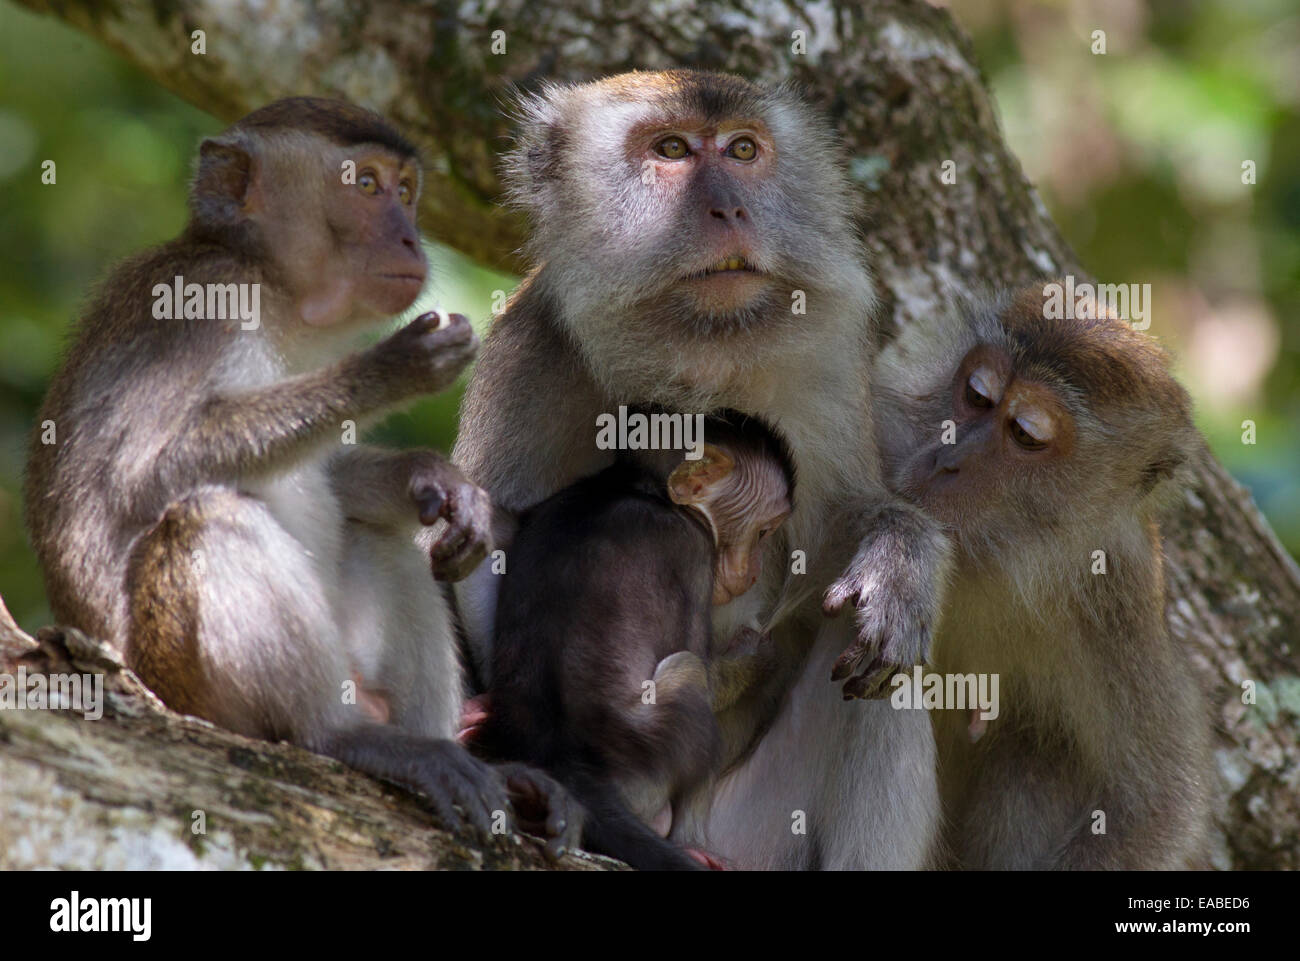 Manger du crabe - Macaca fascicularis macaque - groupe familial, parc national de Bako, Sarawak, Malaisie Banque D'Images